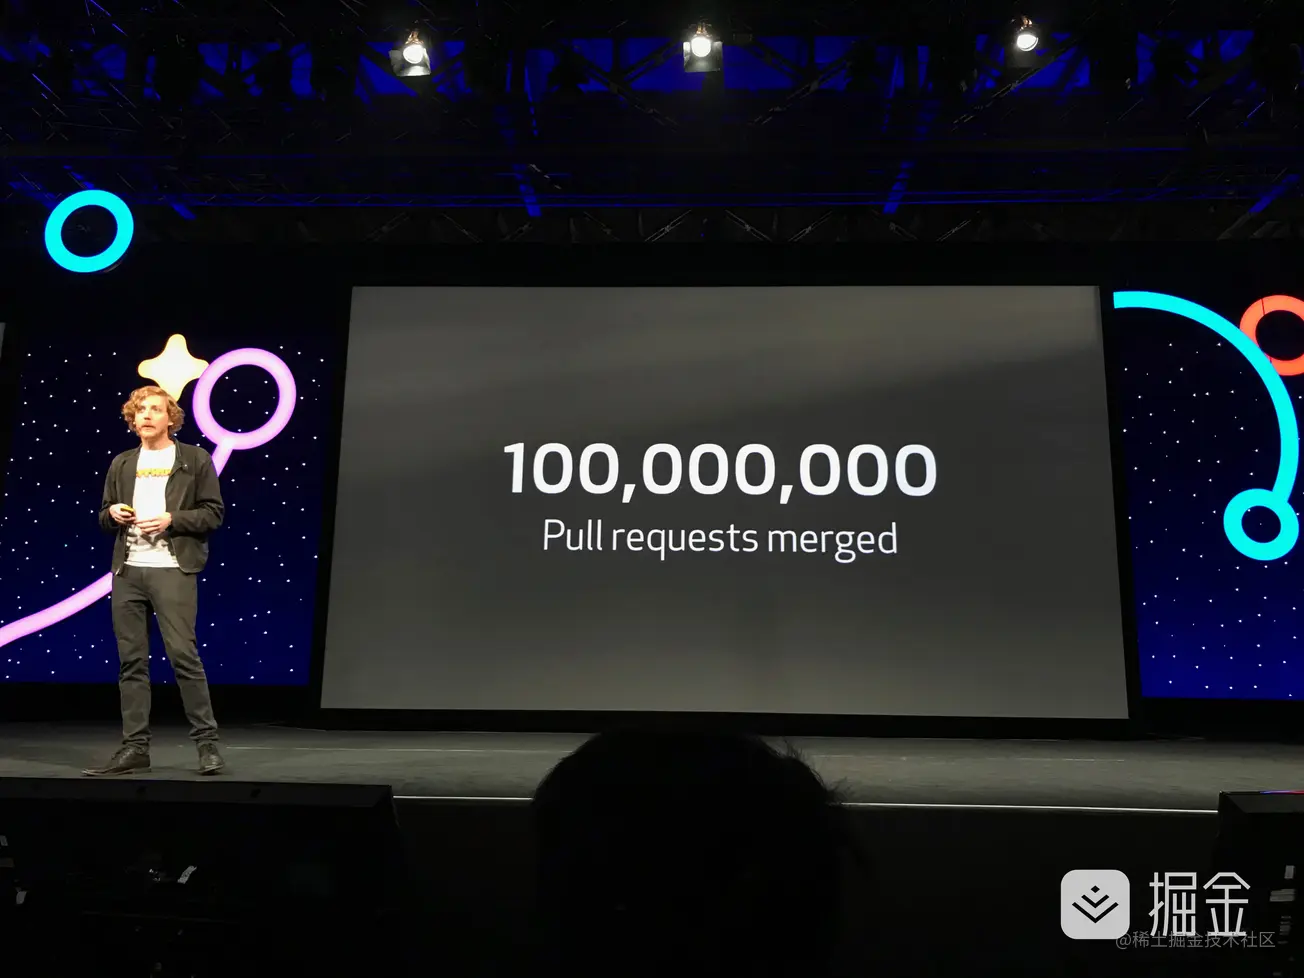 累计已经有 1 亿次 Pull Requests 在 GitHub 上被 Merge